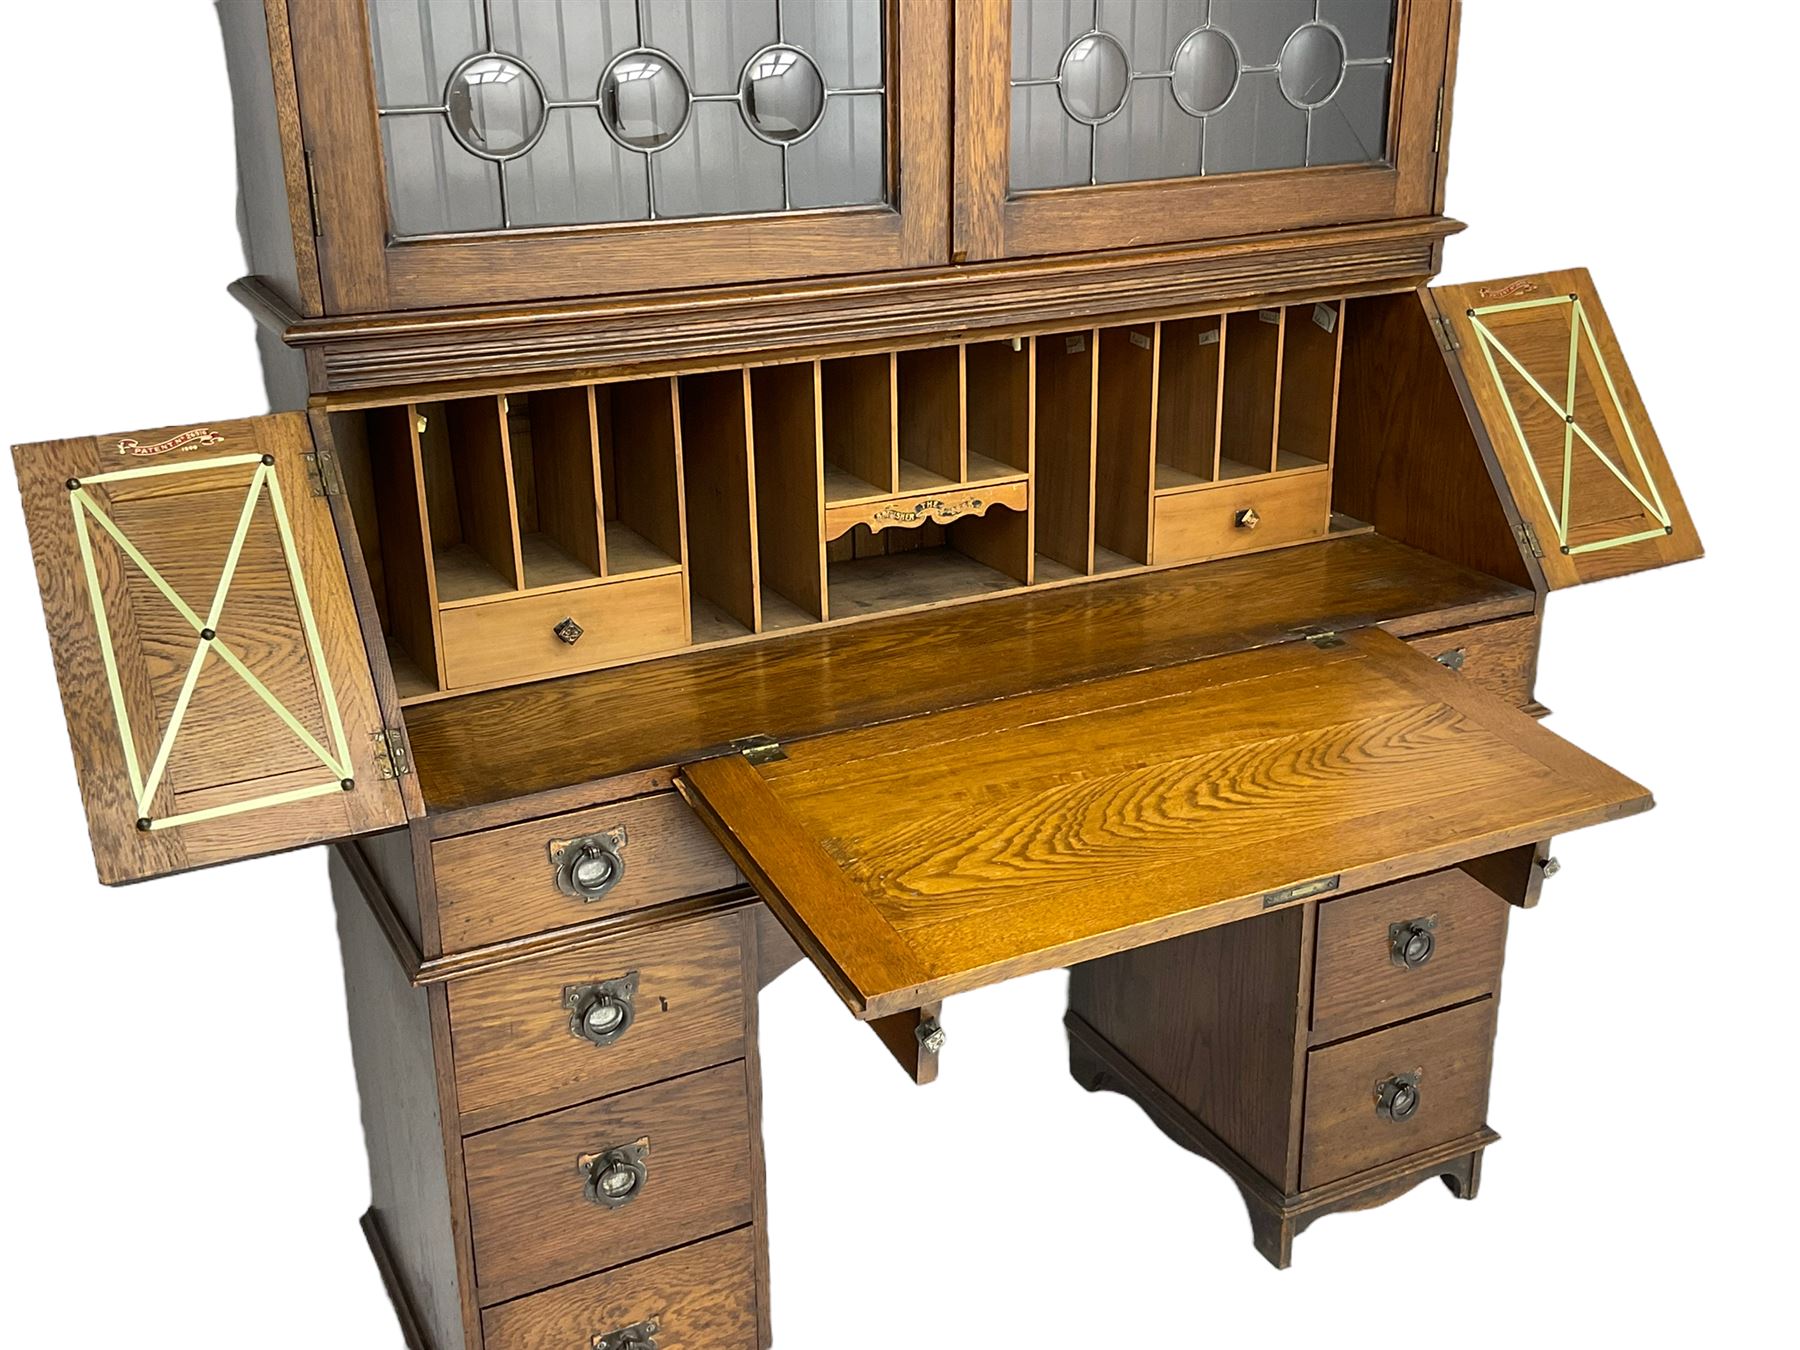 The Britisher Desk - early 20th century oak bureau cabinet - Image 2 of 4